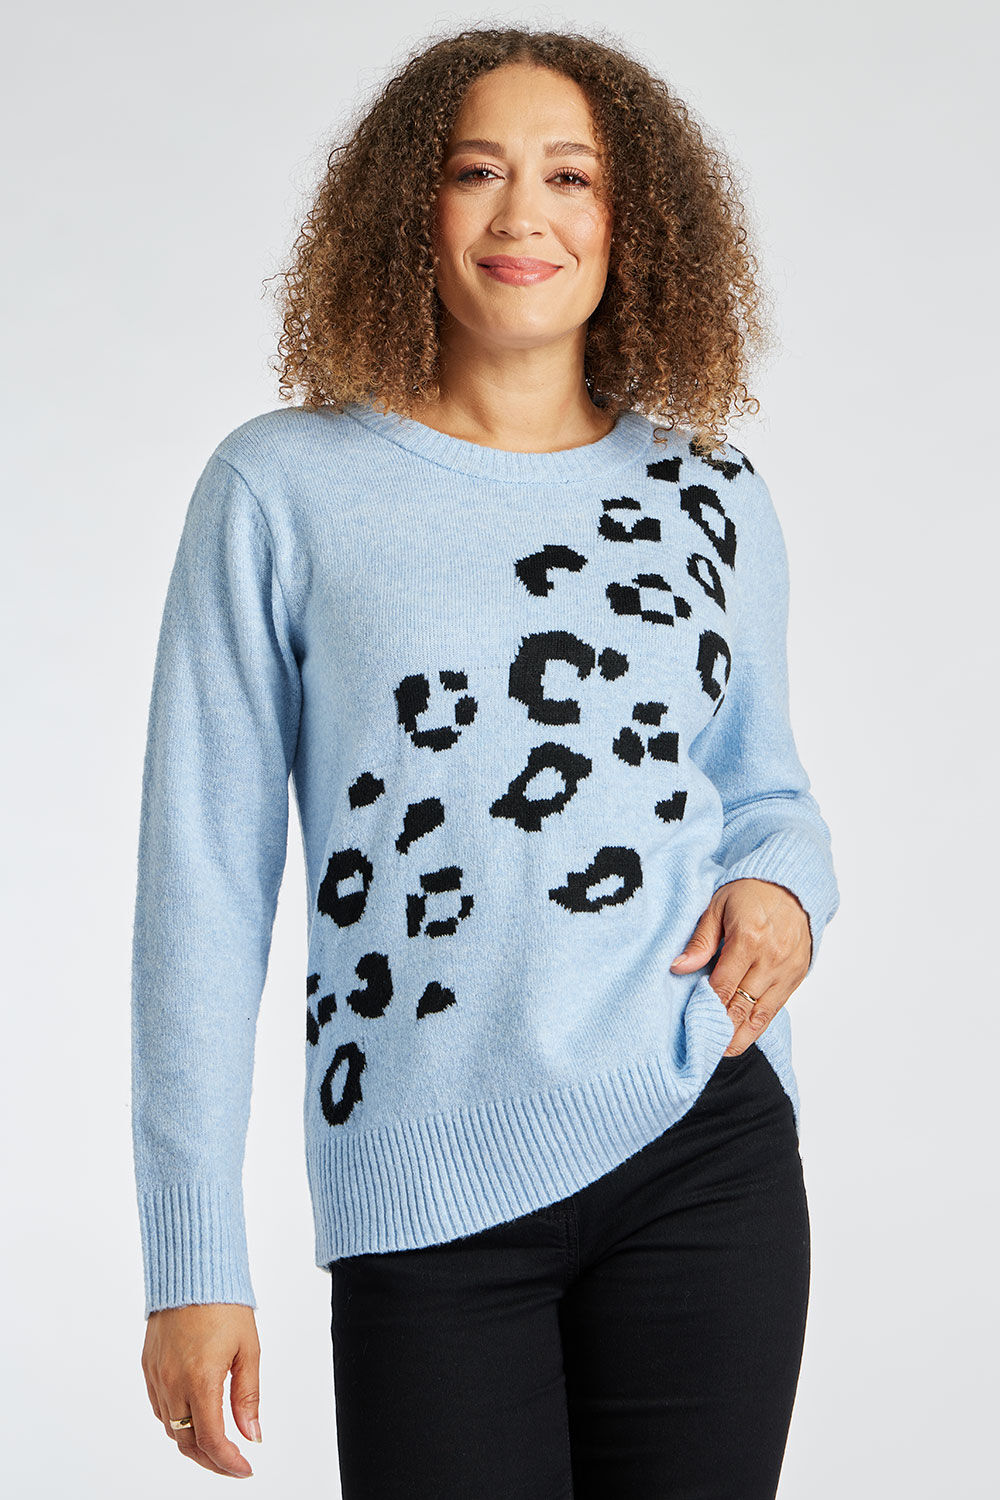 Bonmarche Pale Blue Animal Design Knitted Jumper, Size: 14